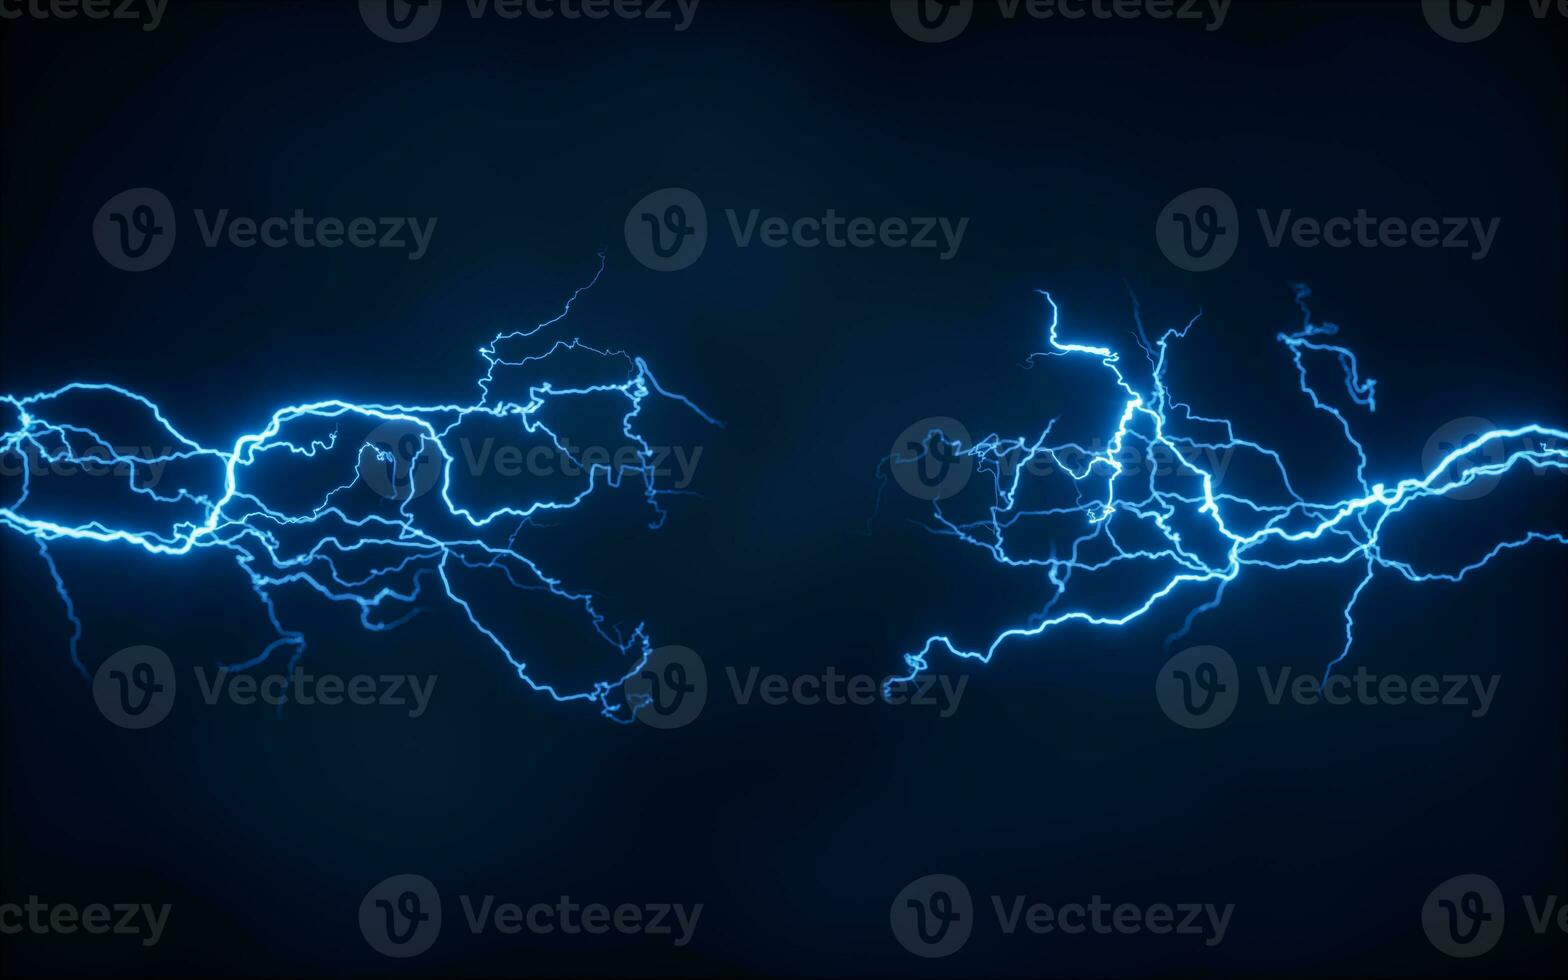 Blue lightning with dark background, 3d rendering. photo